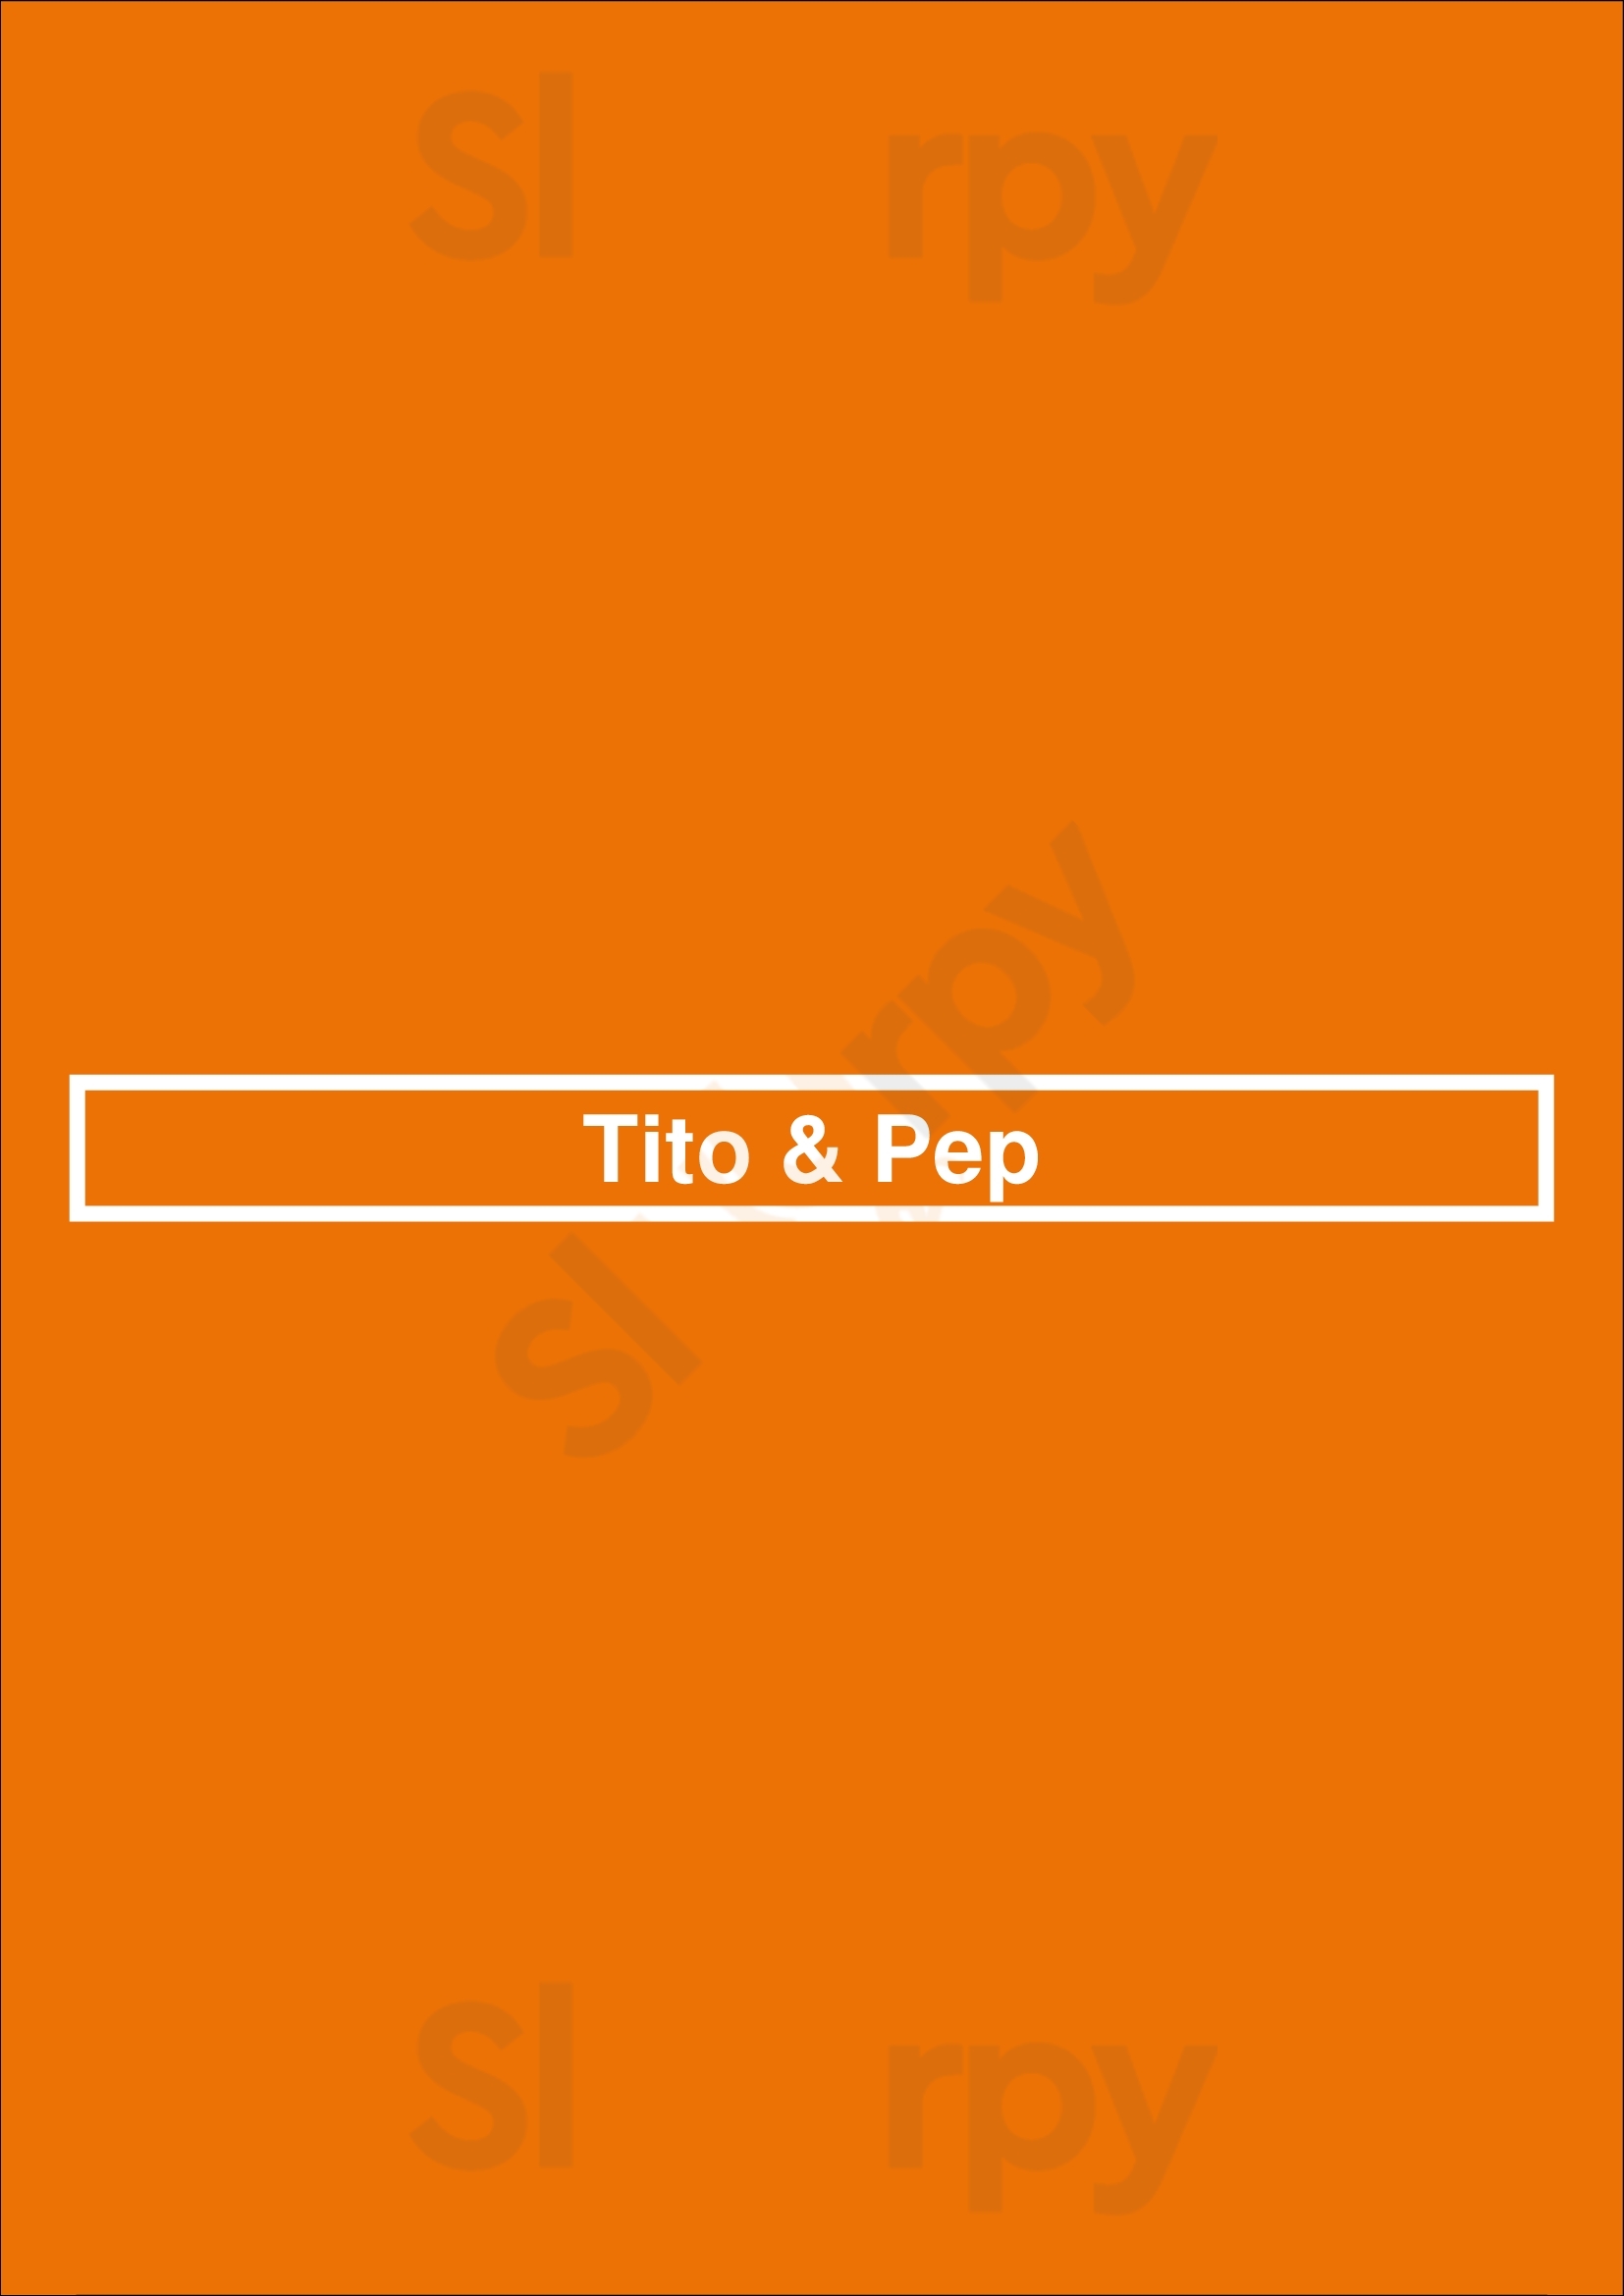 Tito & Pep Tucson Menu - 1